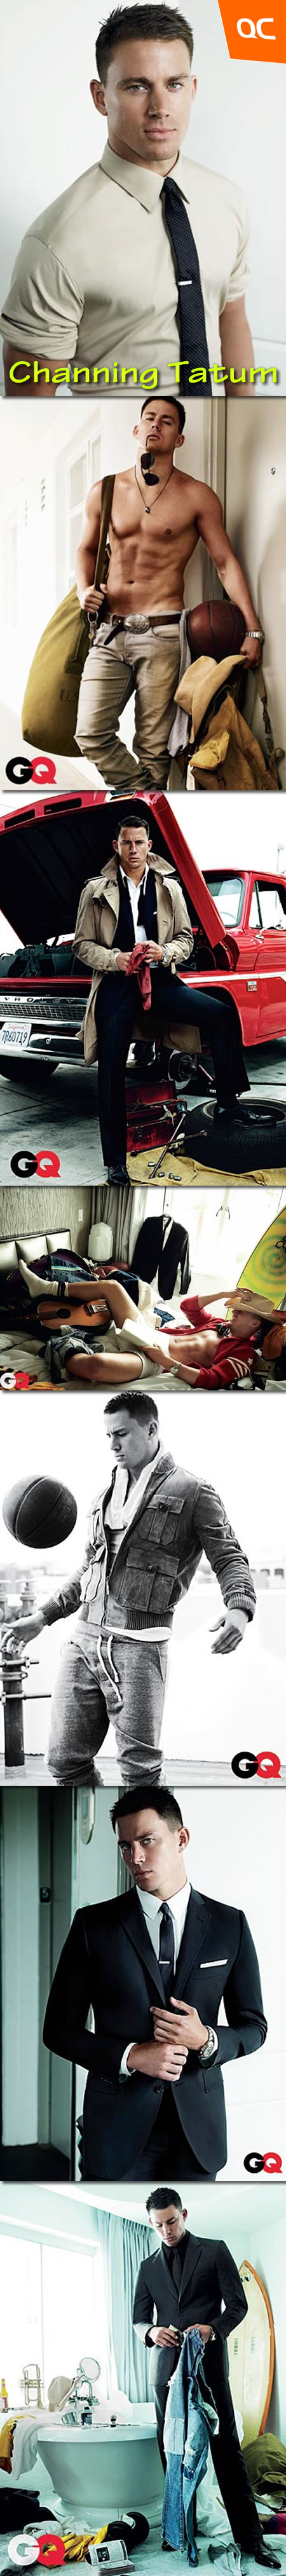 GQ: Channing Tatum